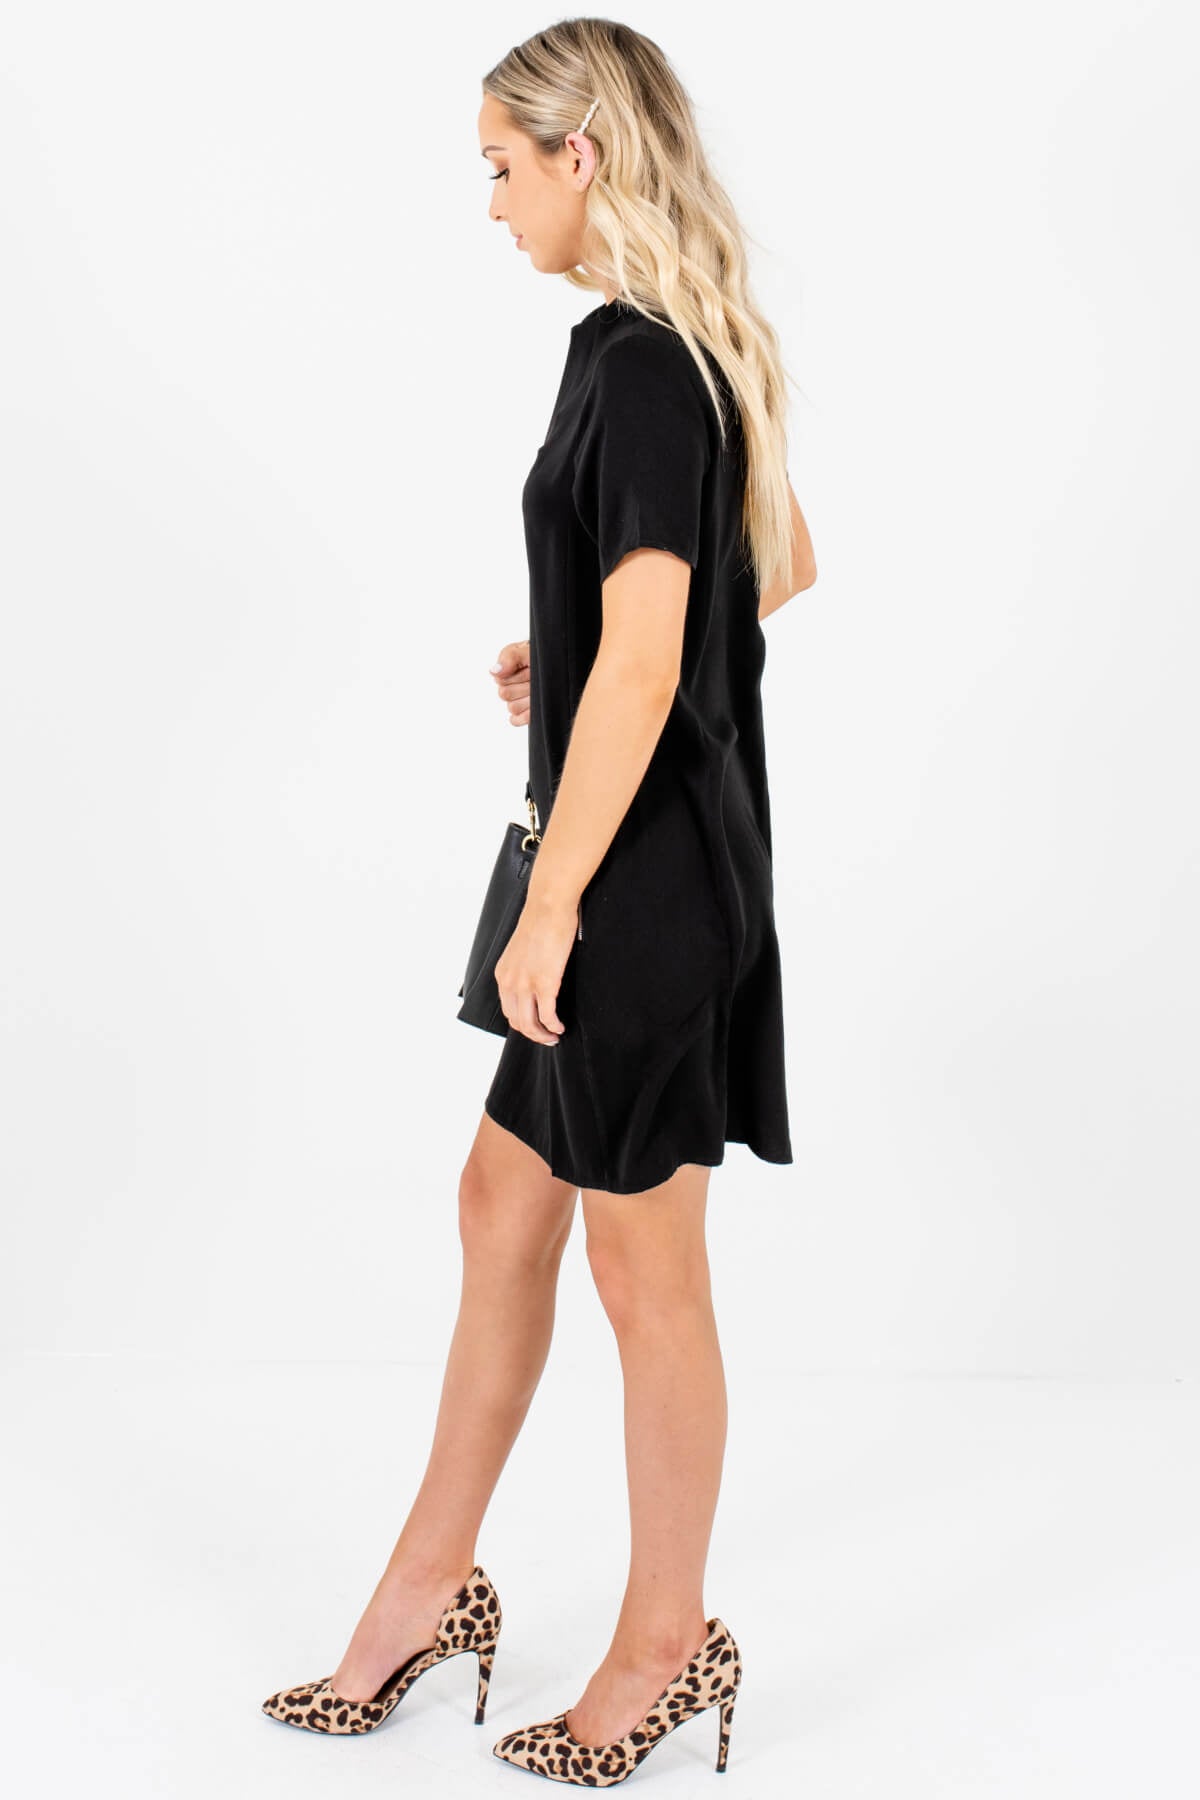 Black Mini Dresses with Zipper Back and Zipper Pockets